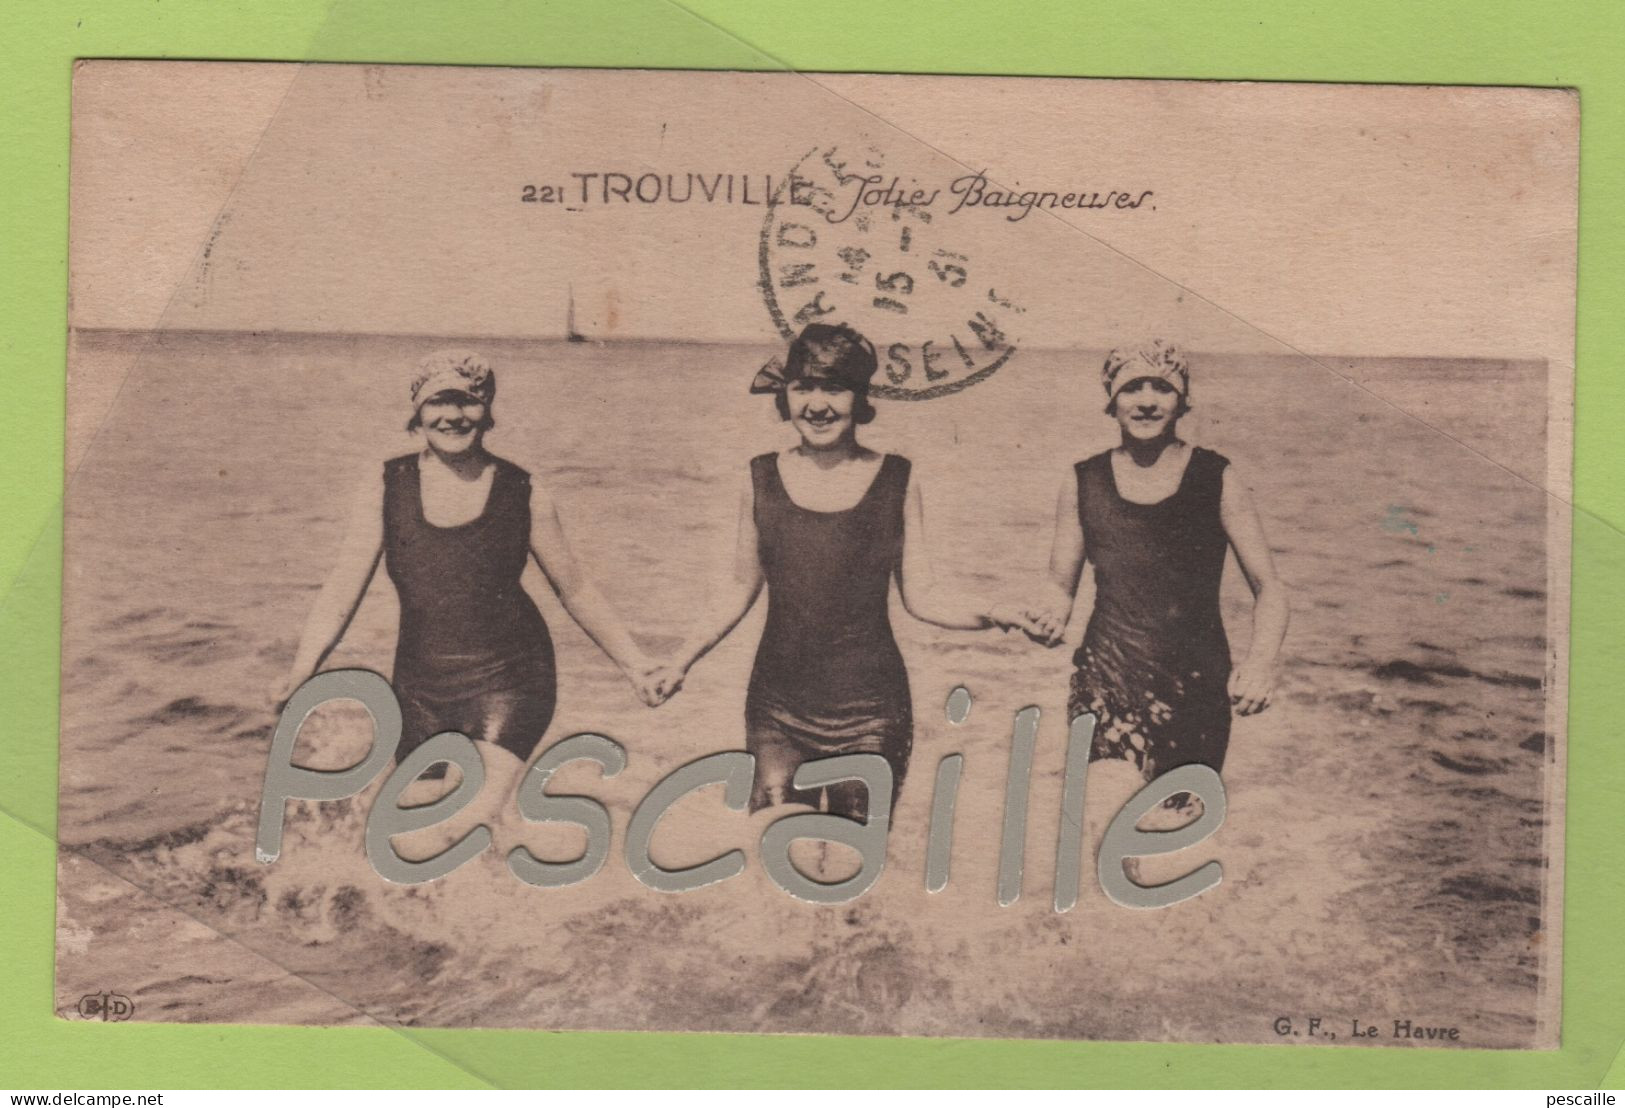 14 CALVADOS - CP ANIMEE TROUVILLE - JOLIES BAIGNEUSES - ELD N° 221 / G. F. LE HAVRE - CIRCULEE EN 1931 - Trouville